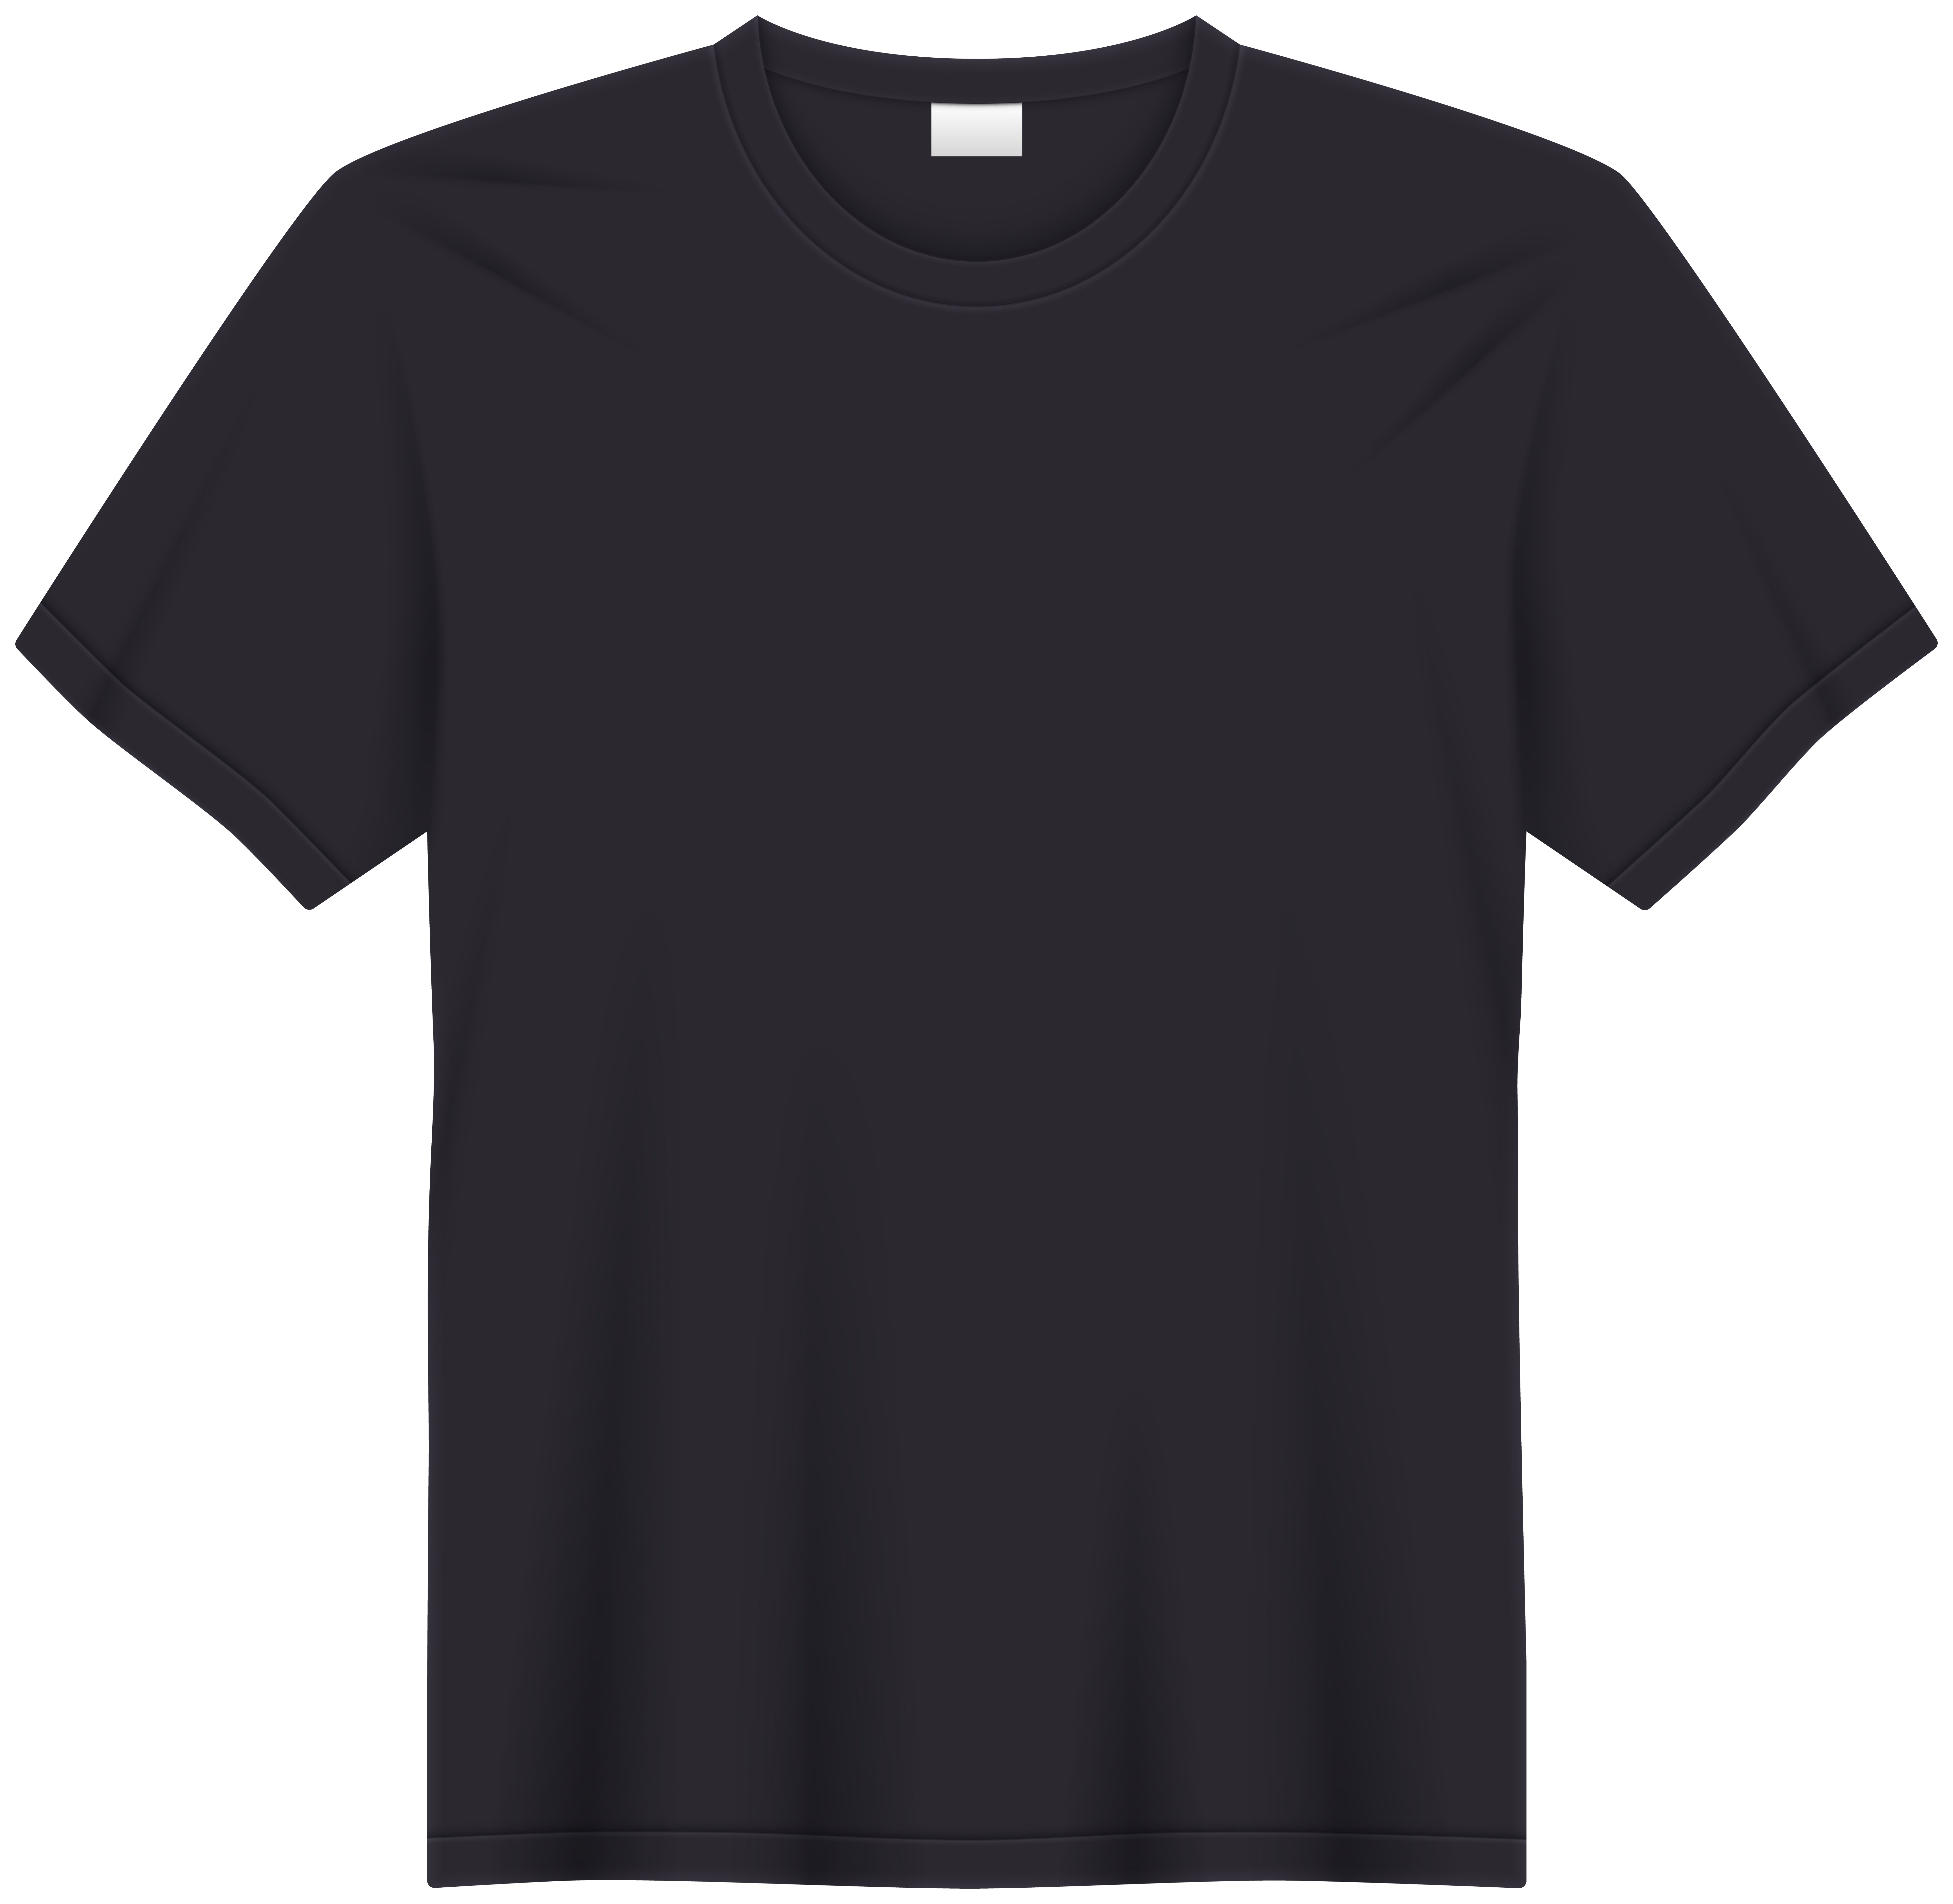 Free Black Shirt Cliparts, Download Free Black Shirt Cliparts png